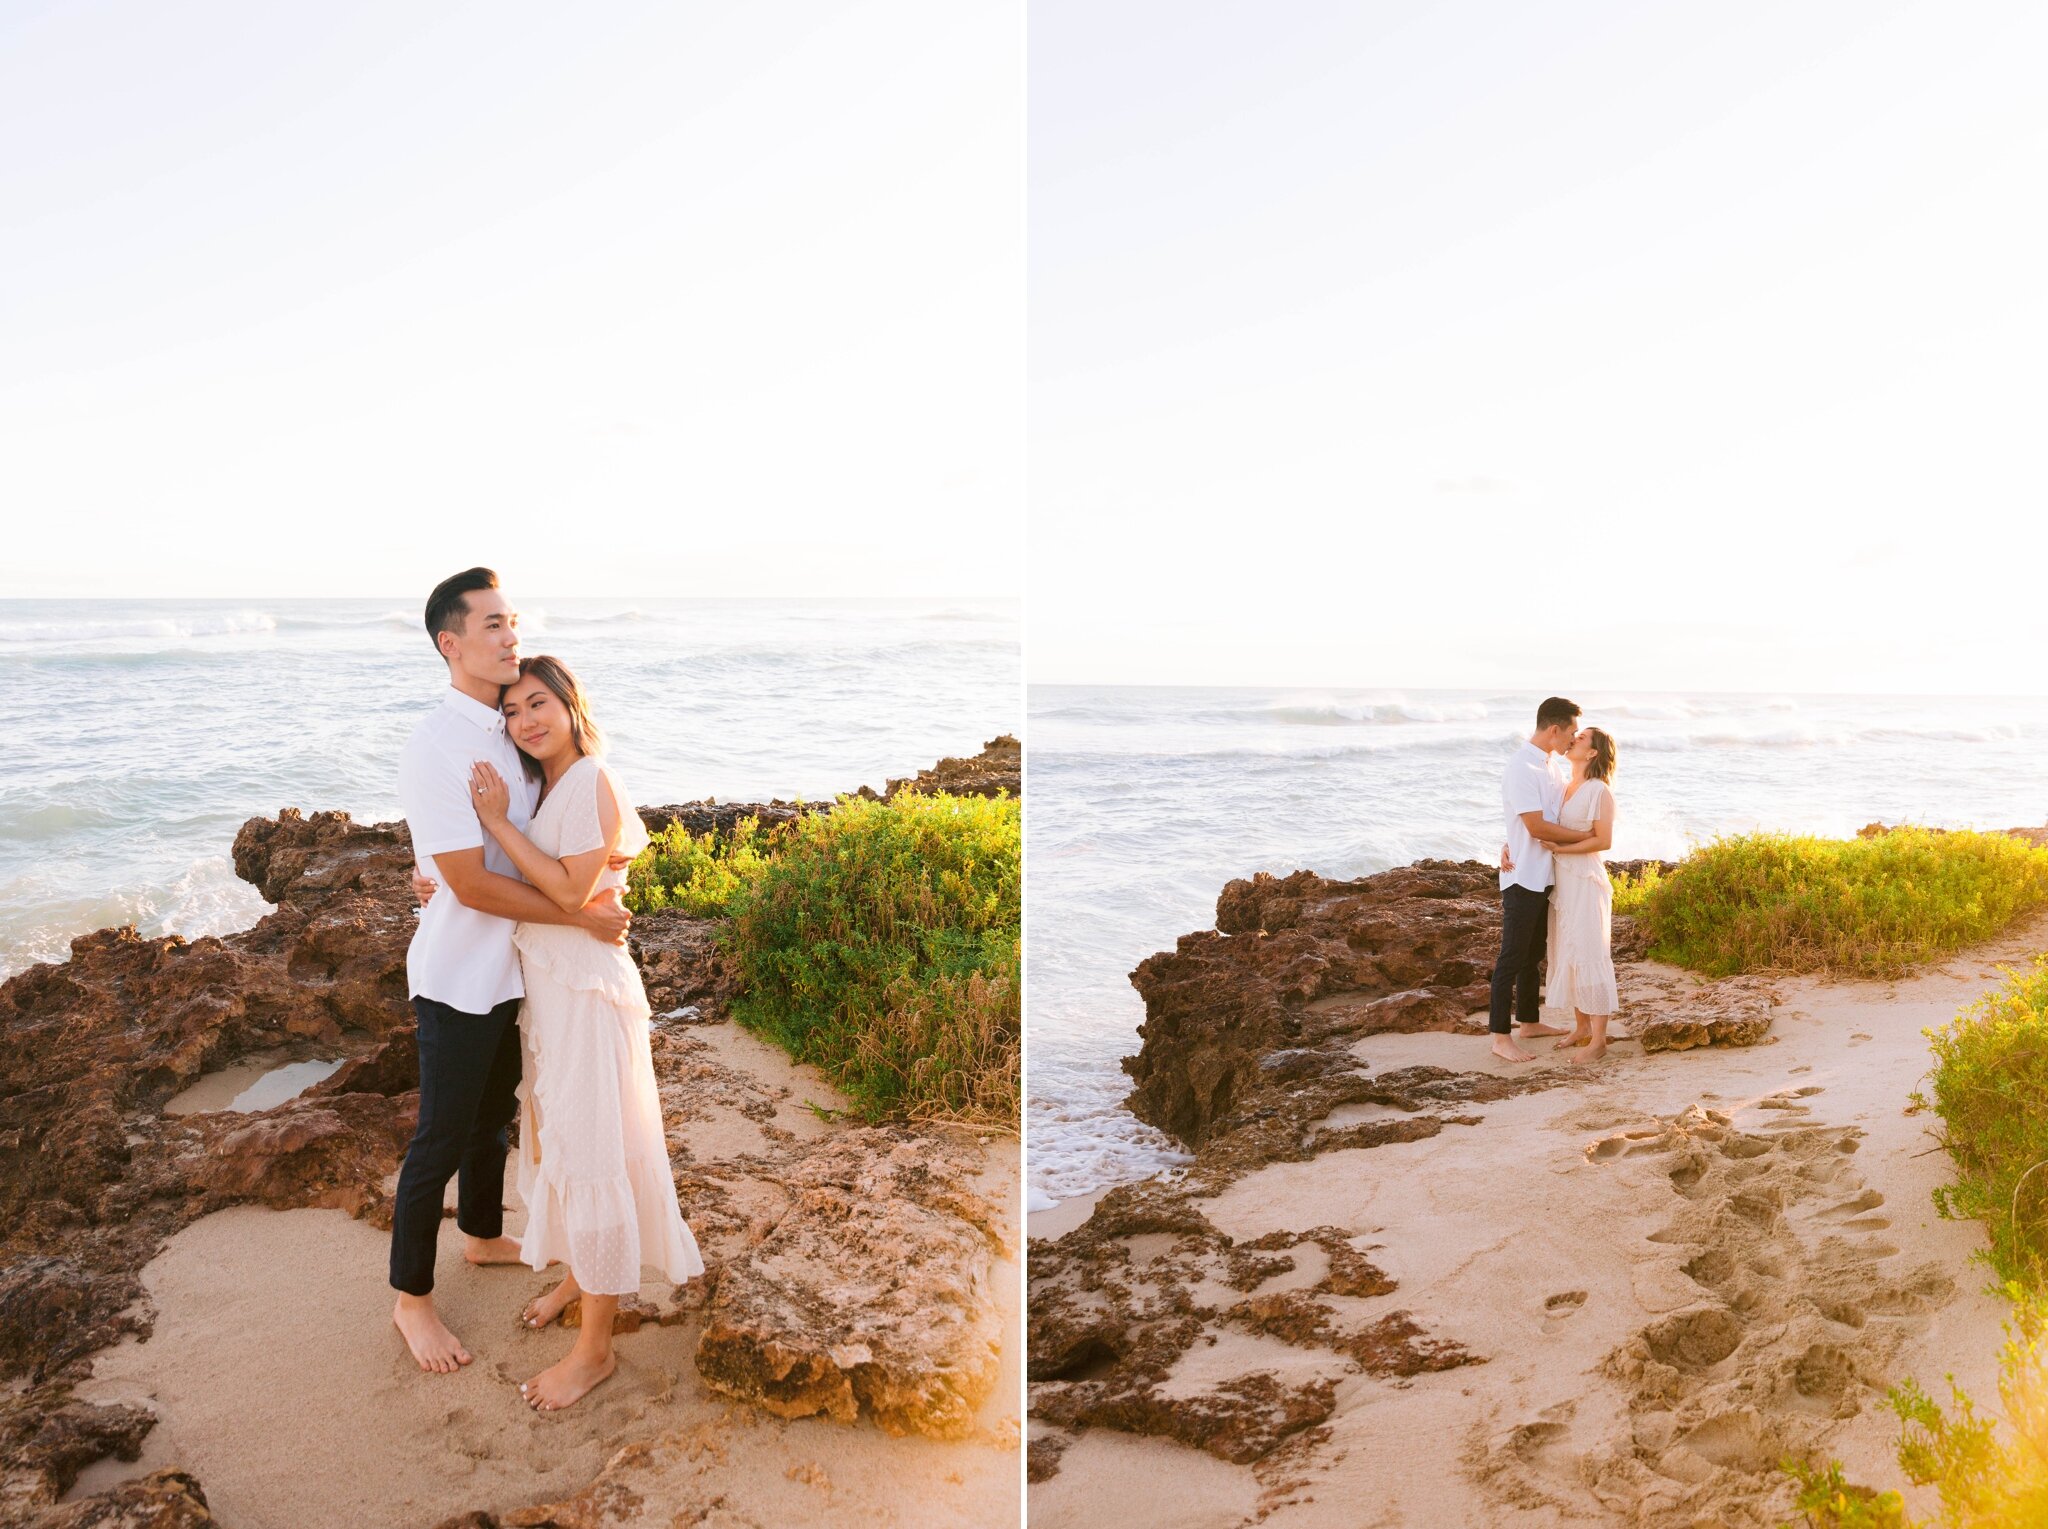 Chisu + Bobby - Romantic Engagement Session at Sunset - Barbers Point Beach Park - Oahu Hawaii Wedding Photographer